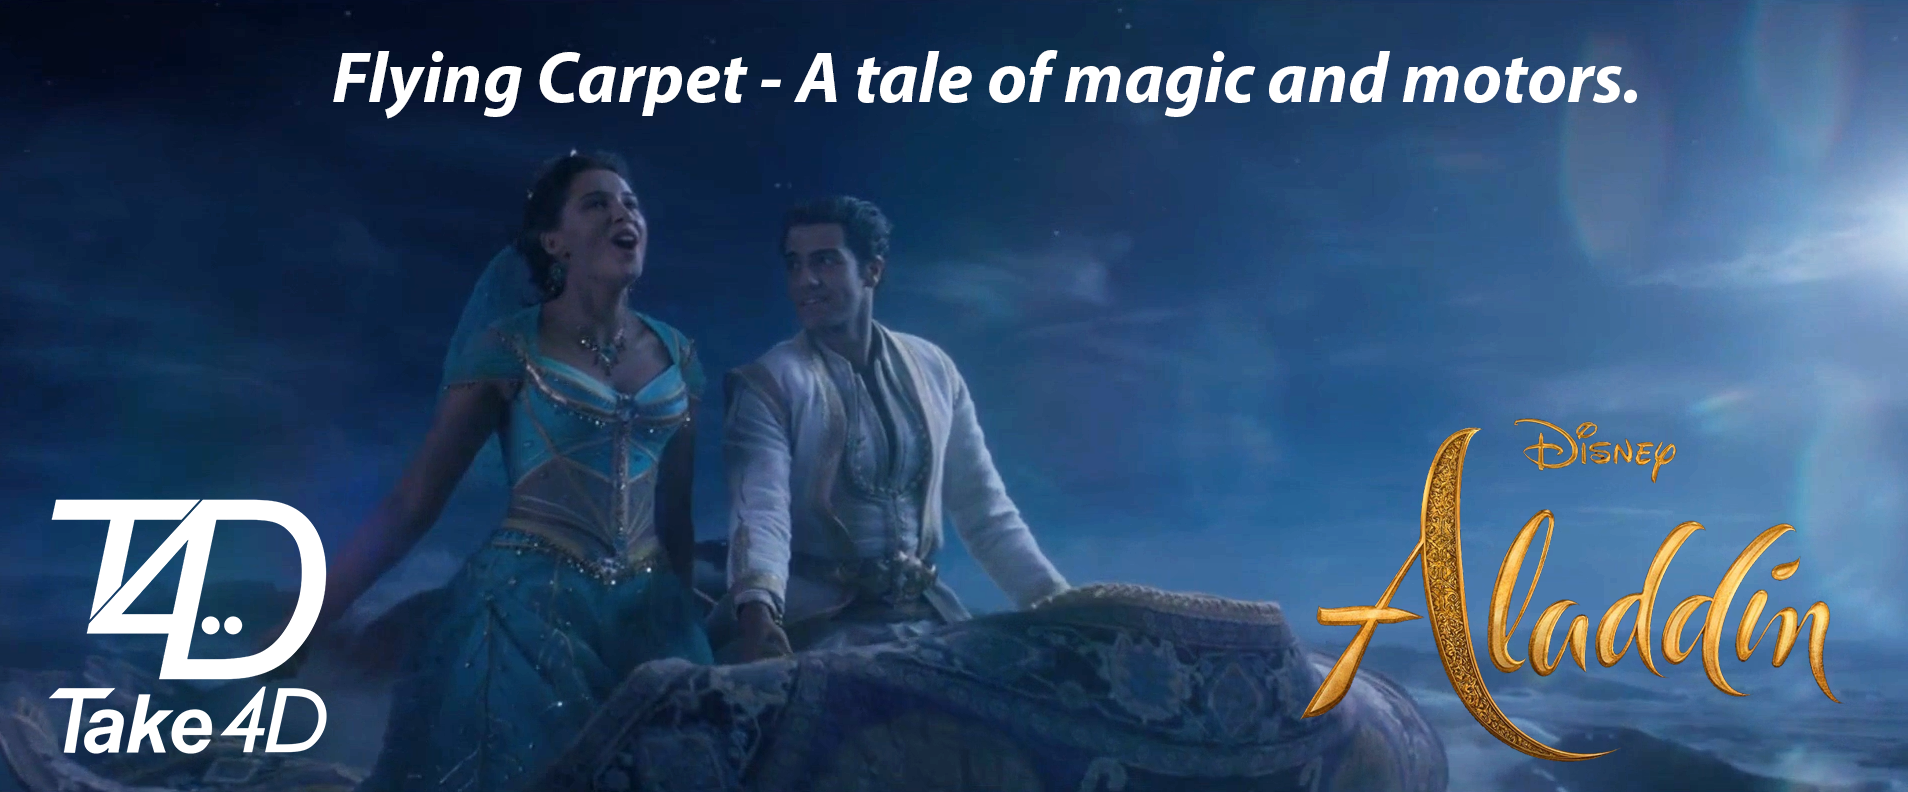 Aladdin - Take4D - Flying Carpet - A tale of magic and motors.